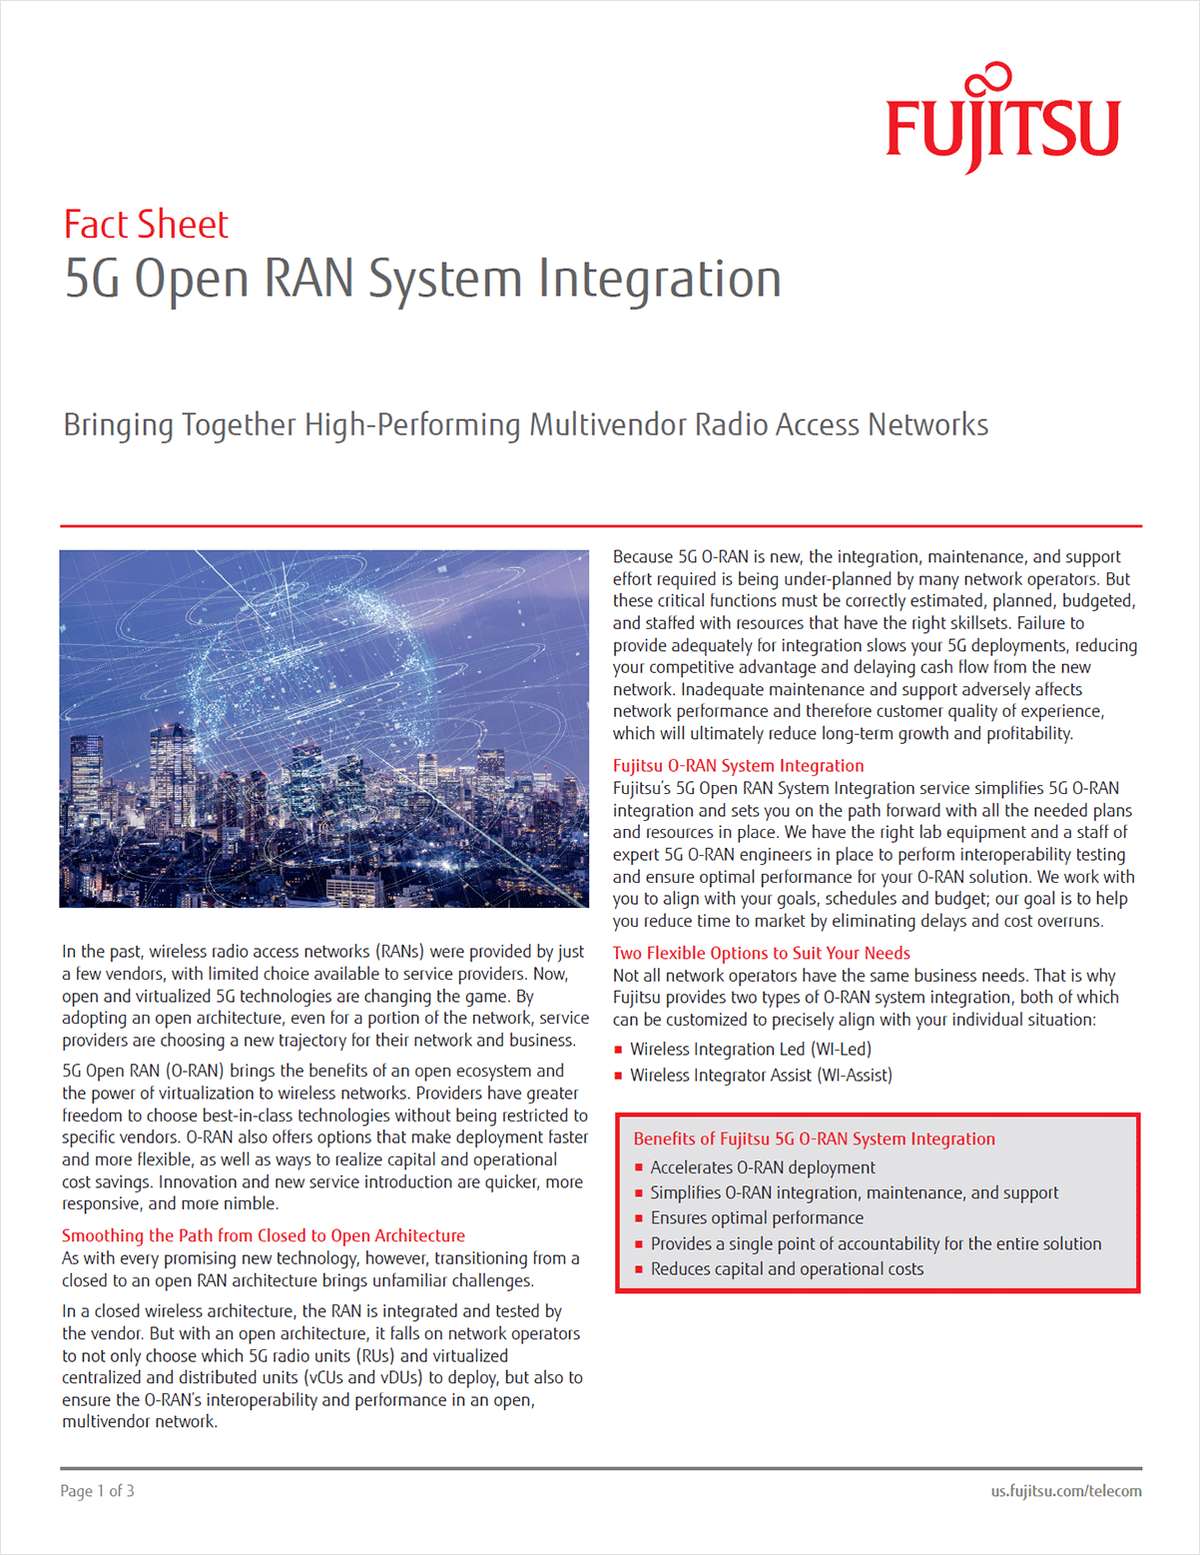 Fujitsu 5G Open RAN Systems Integration